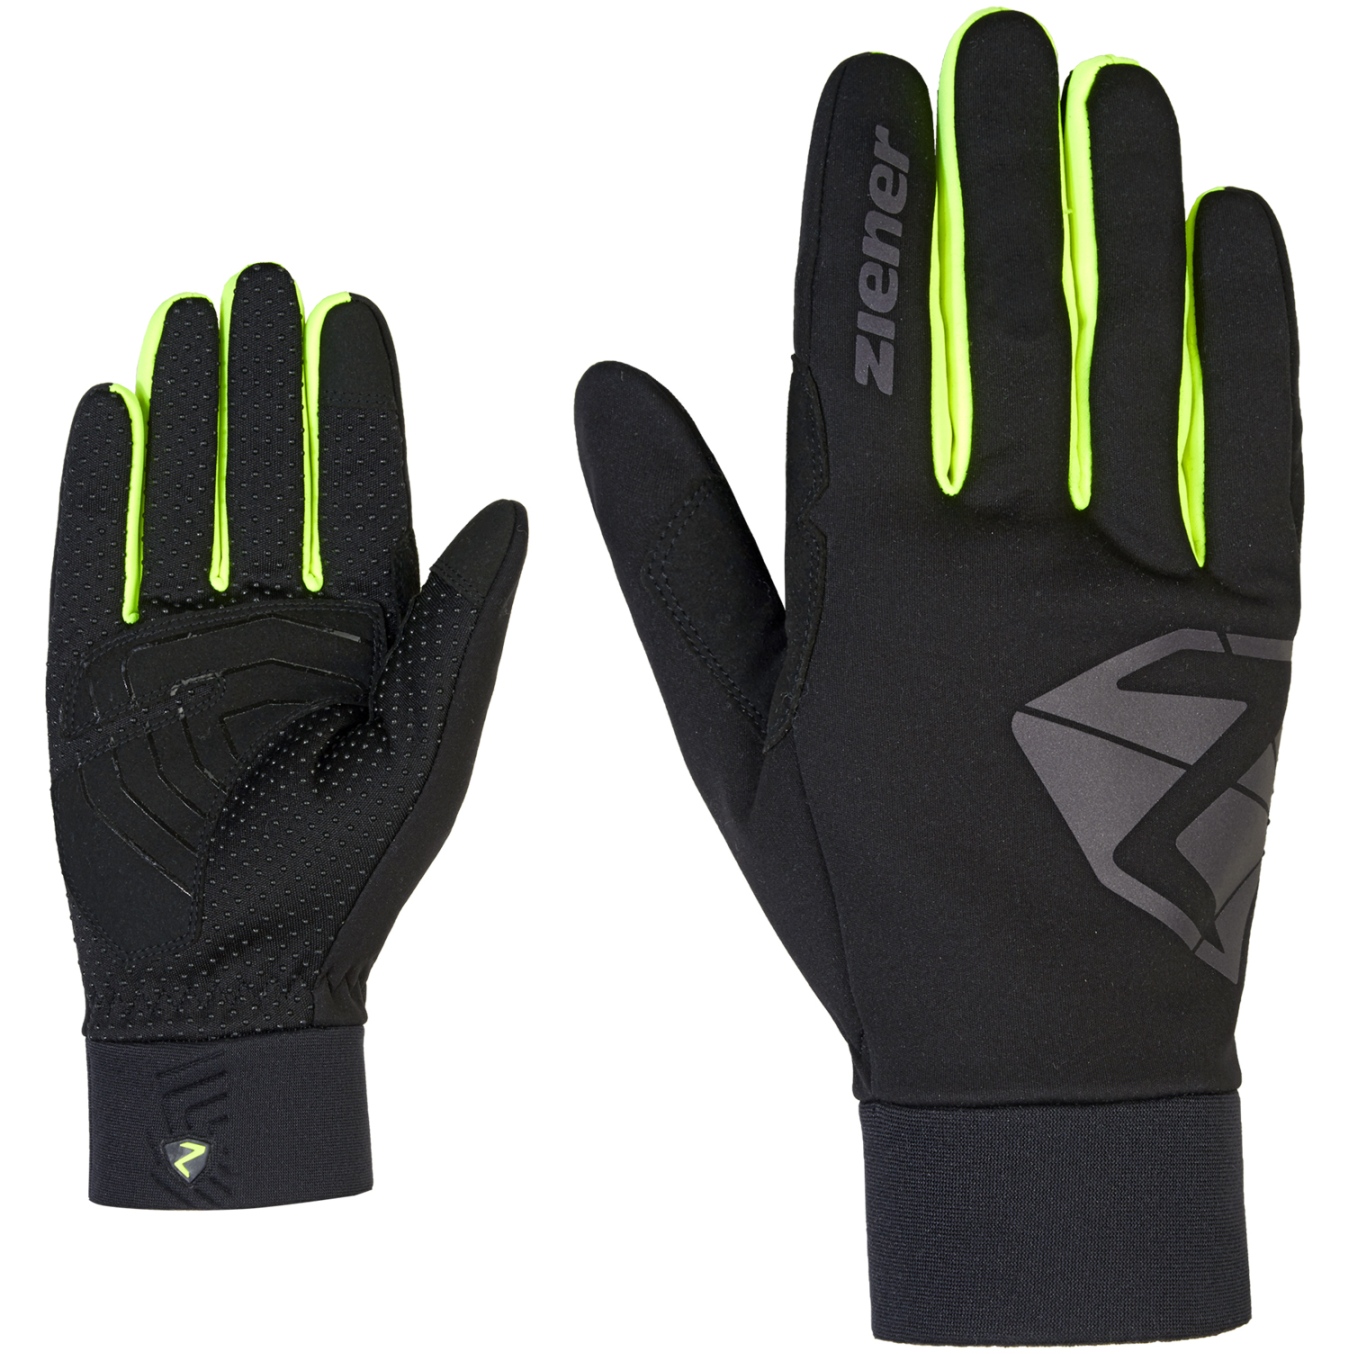 Picture of Ziener Dojan Touch Bike Gloves - black.poison yellow